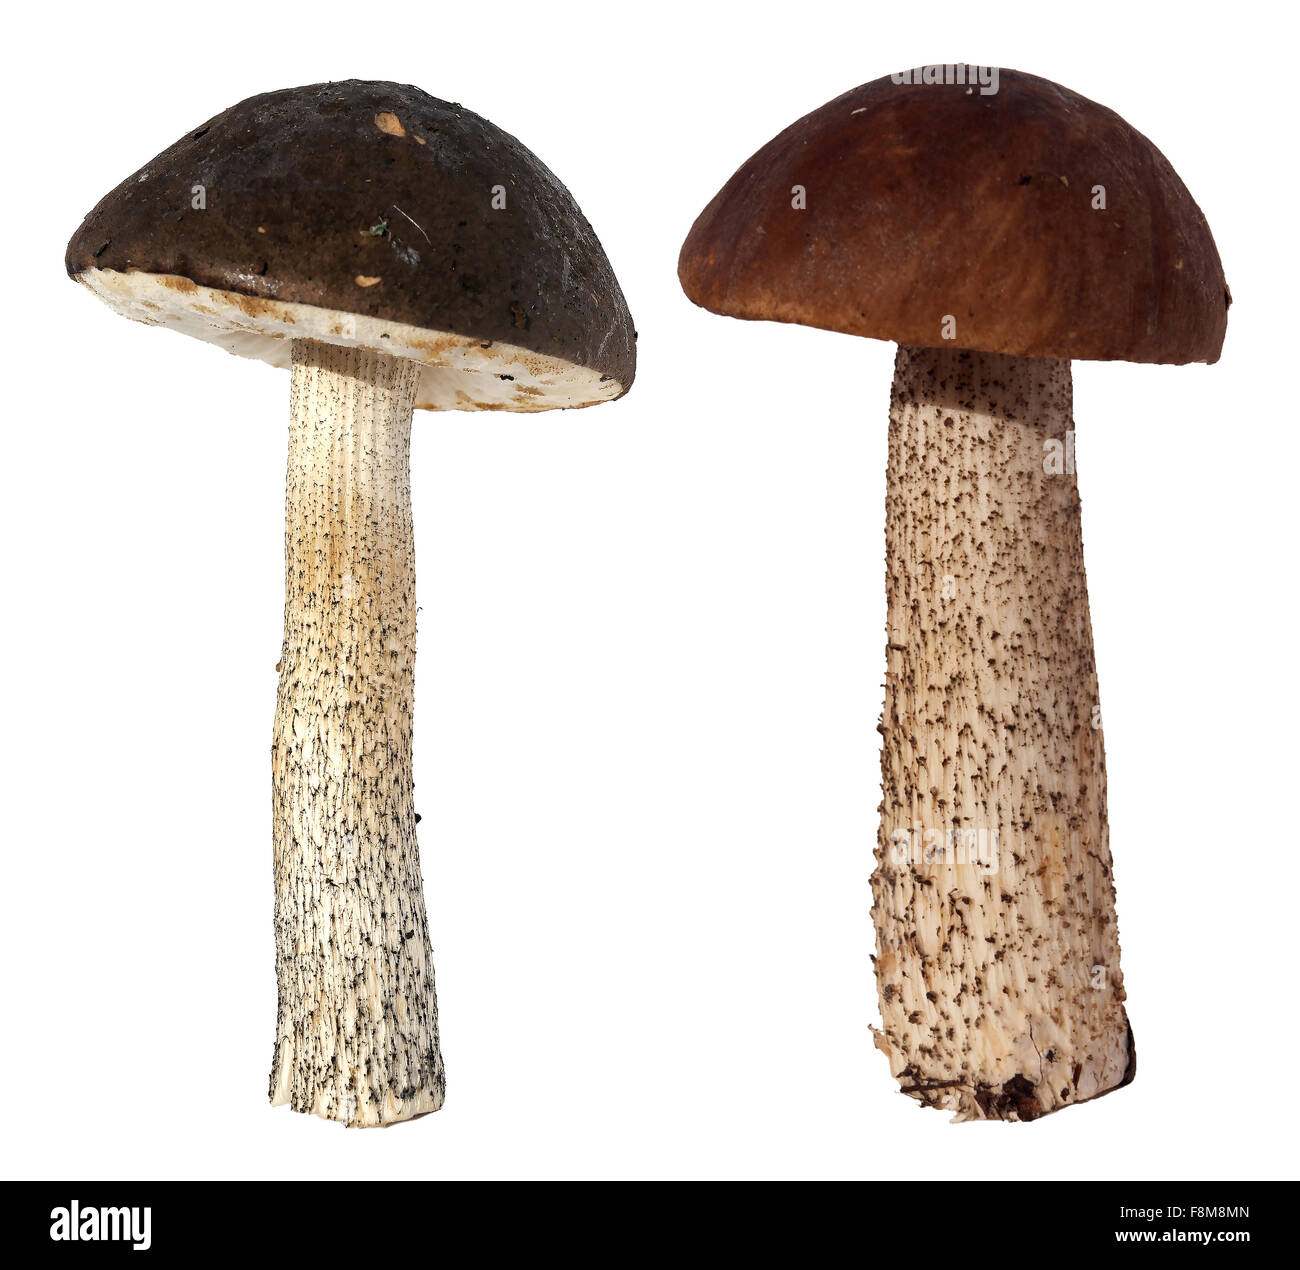 Rough-stemmed bolete mushroom isolated on white background Stock Photo